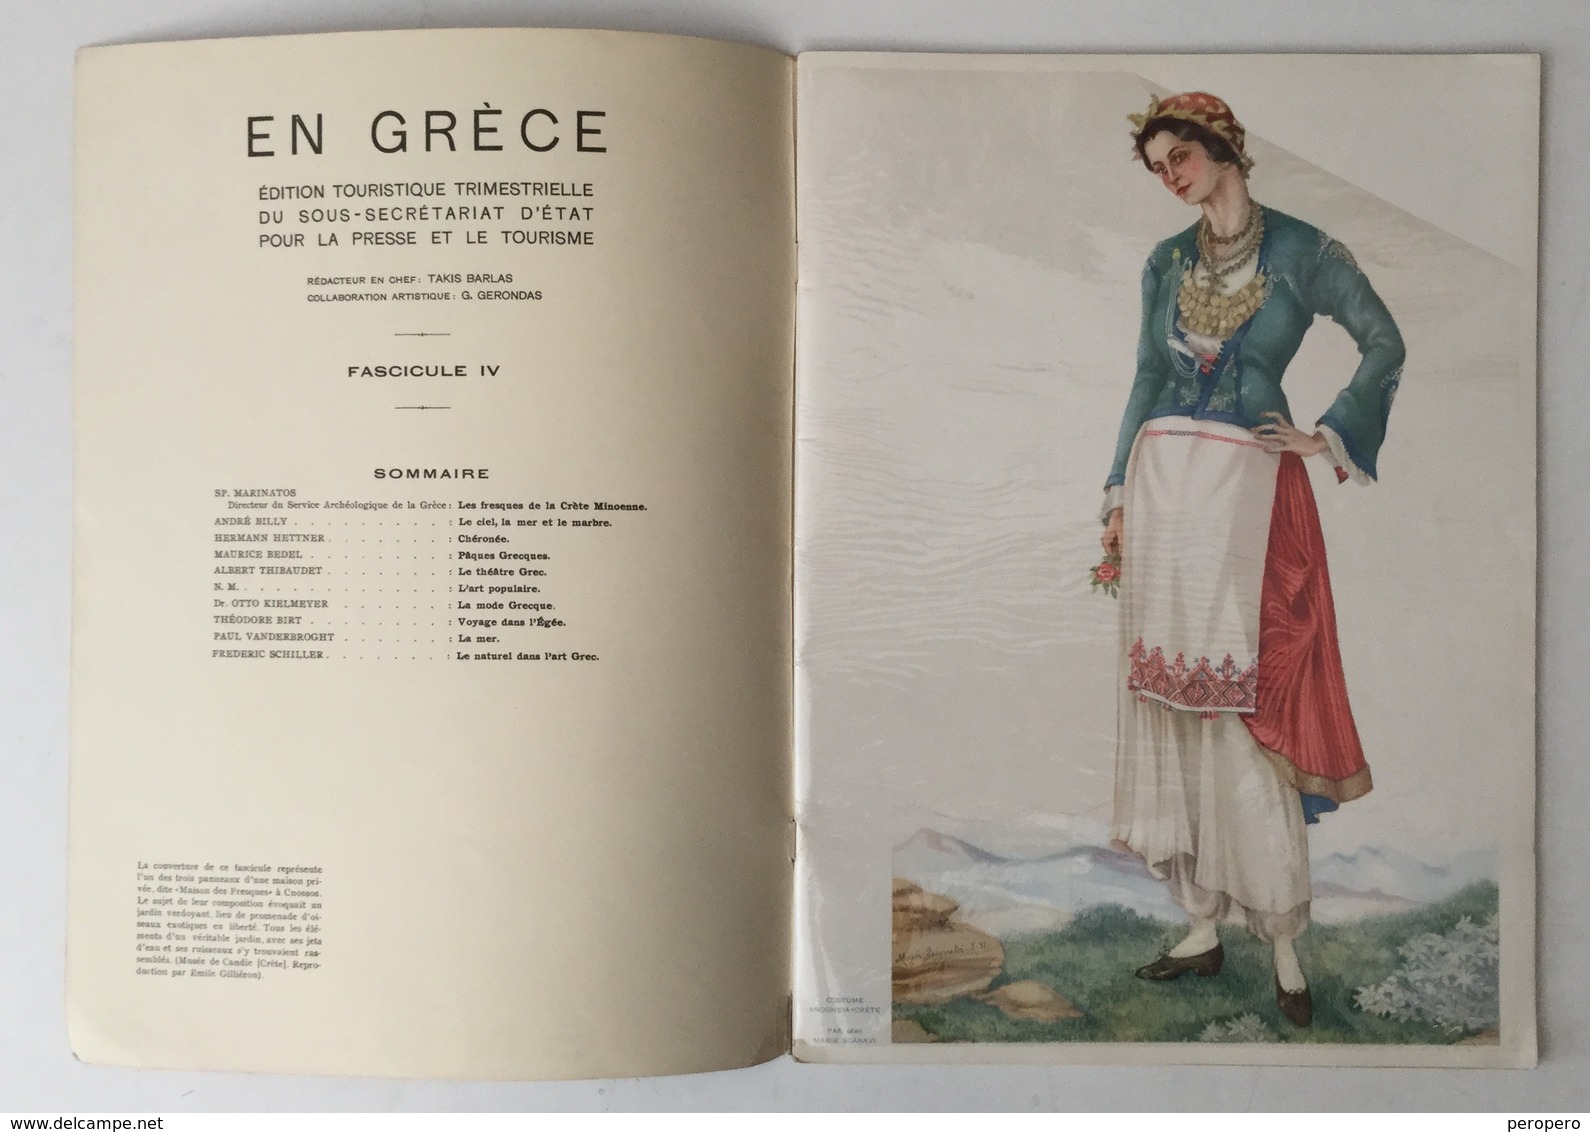 EN GRECE   MAGAZINE   1930's     GREECE    TOURISTIC MAGAZINE  WITH LITHO IMAGE  EDITION  TOURISTIQUE TRIMESTRIELLE - 1900 - 1949